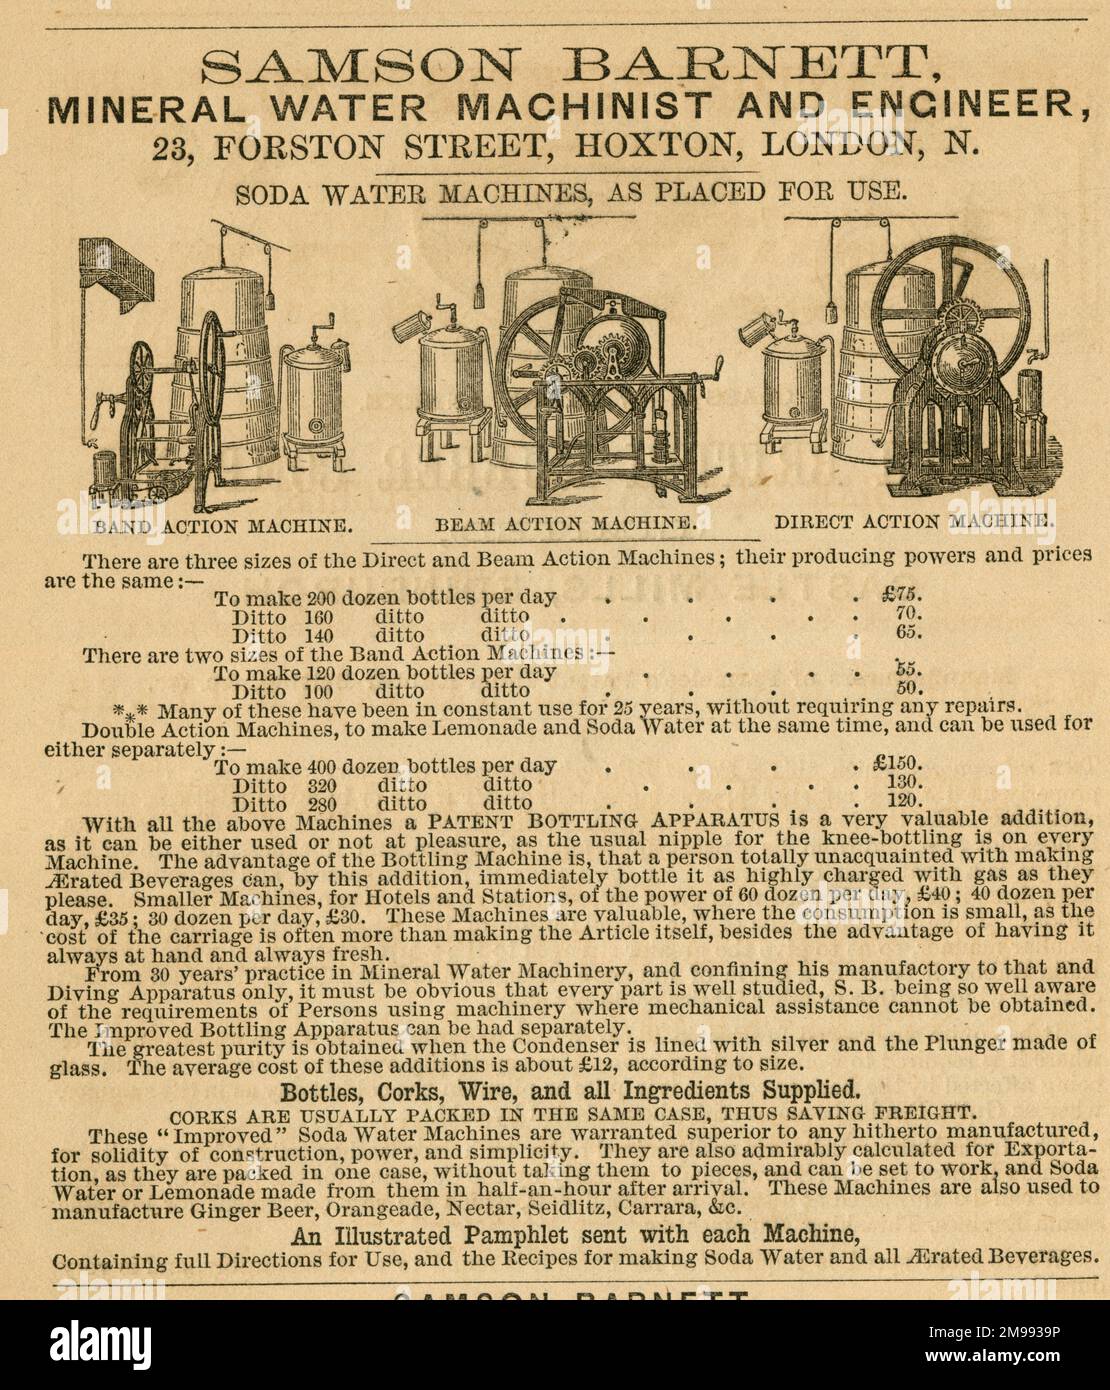 Advertisement for Samson Barnett, Mineral Water Machinist and Engineer. Stock Photo